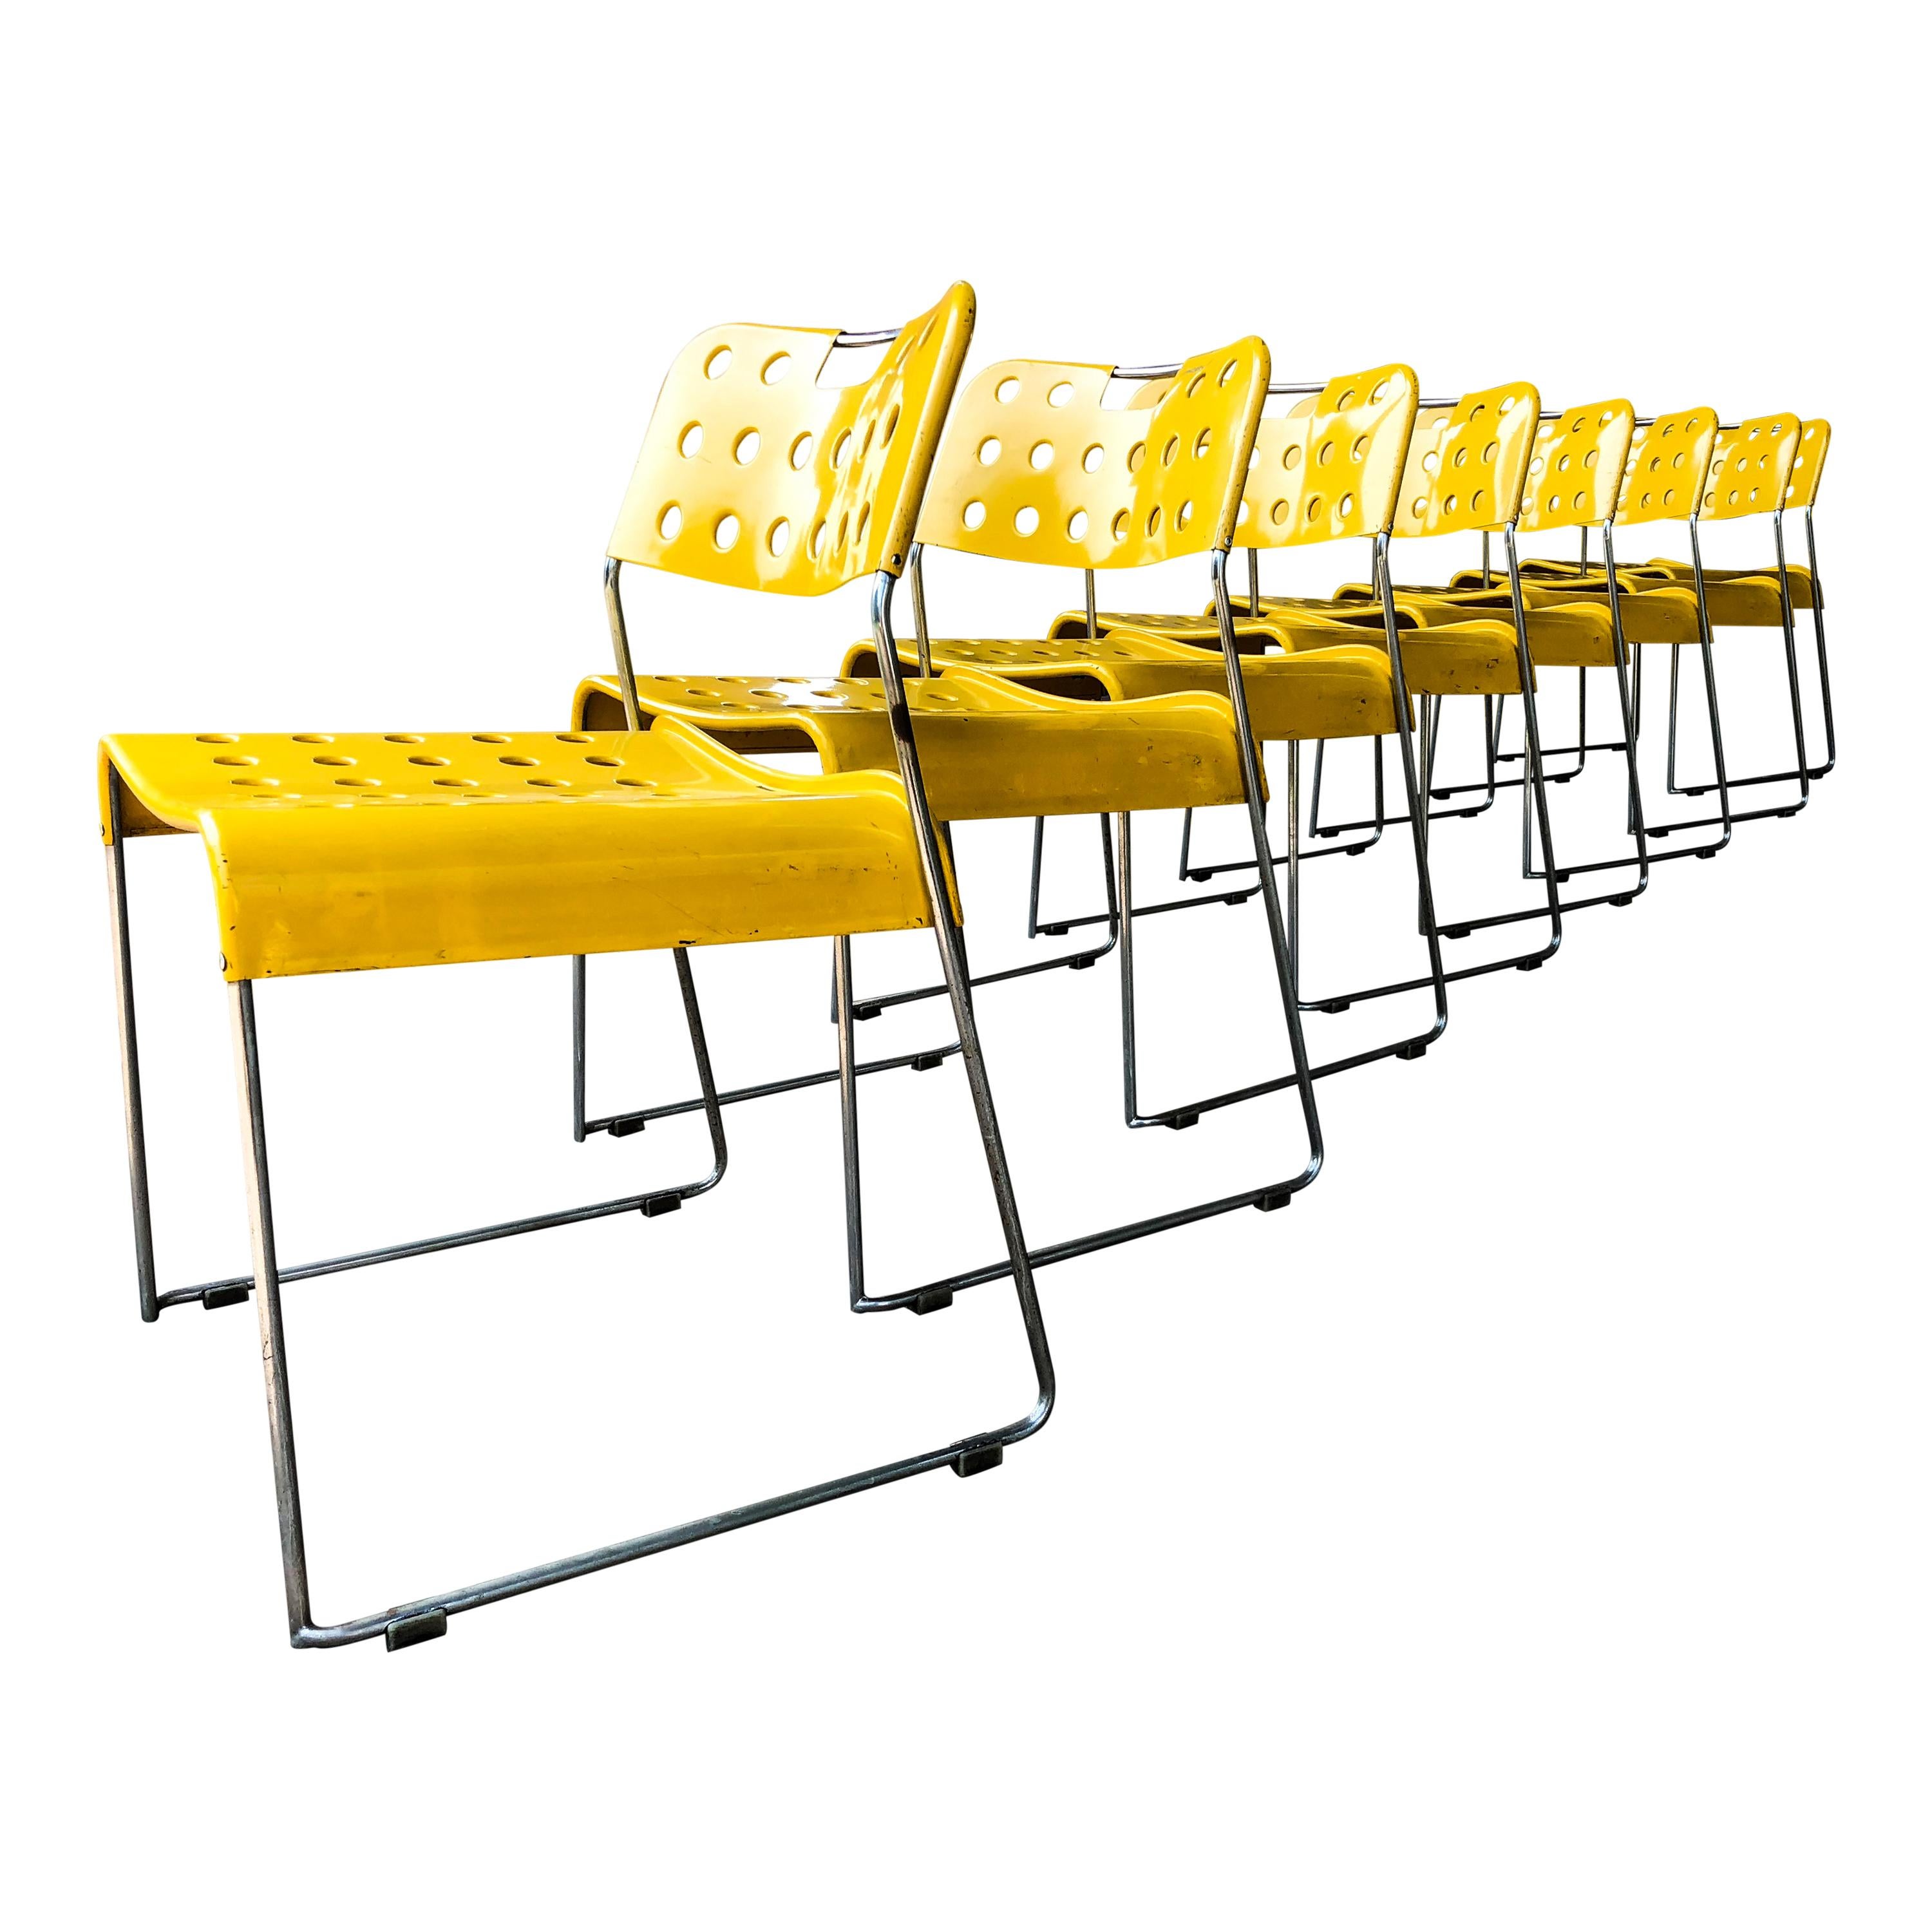 Italian Rodney Kinsman Space Age Yellow Omstak Chair for Bieffeplast, 1971, Set of 4 For Sale